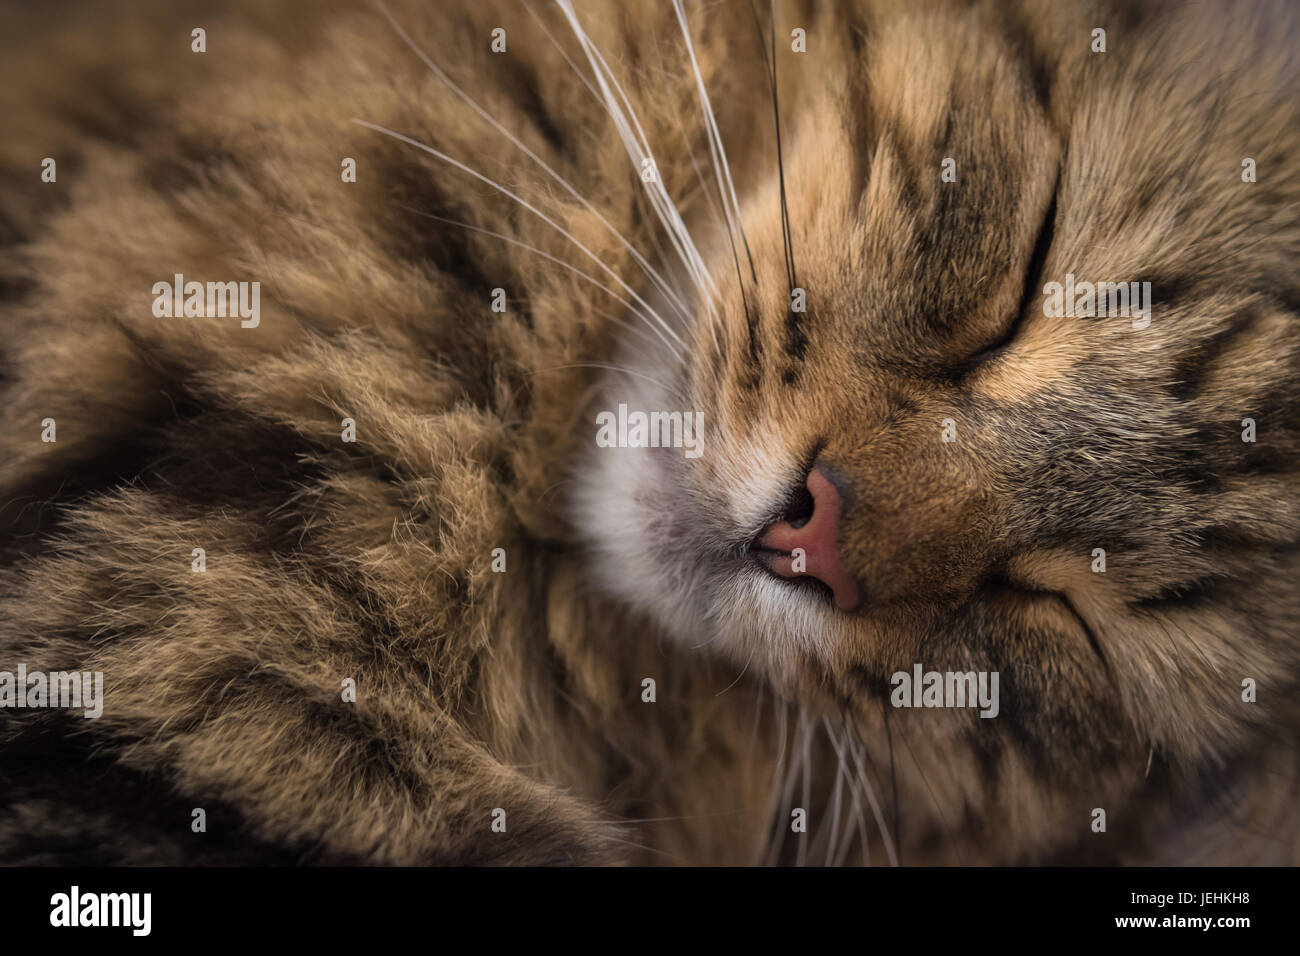 Close up Sleeping Tabby Cat ritratto Foto Stock